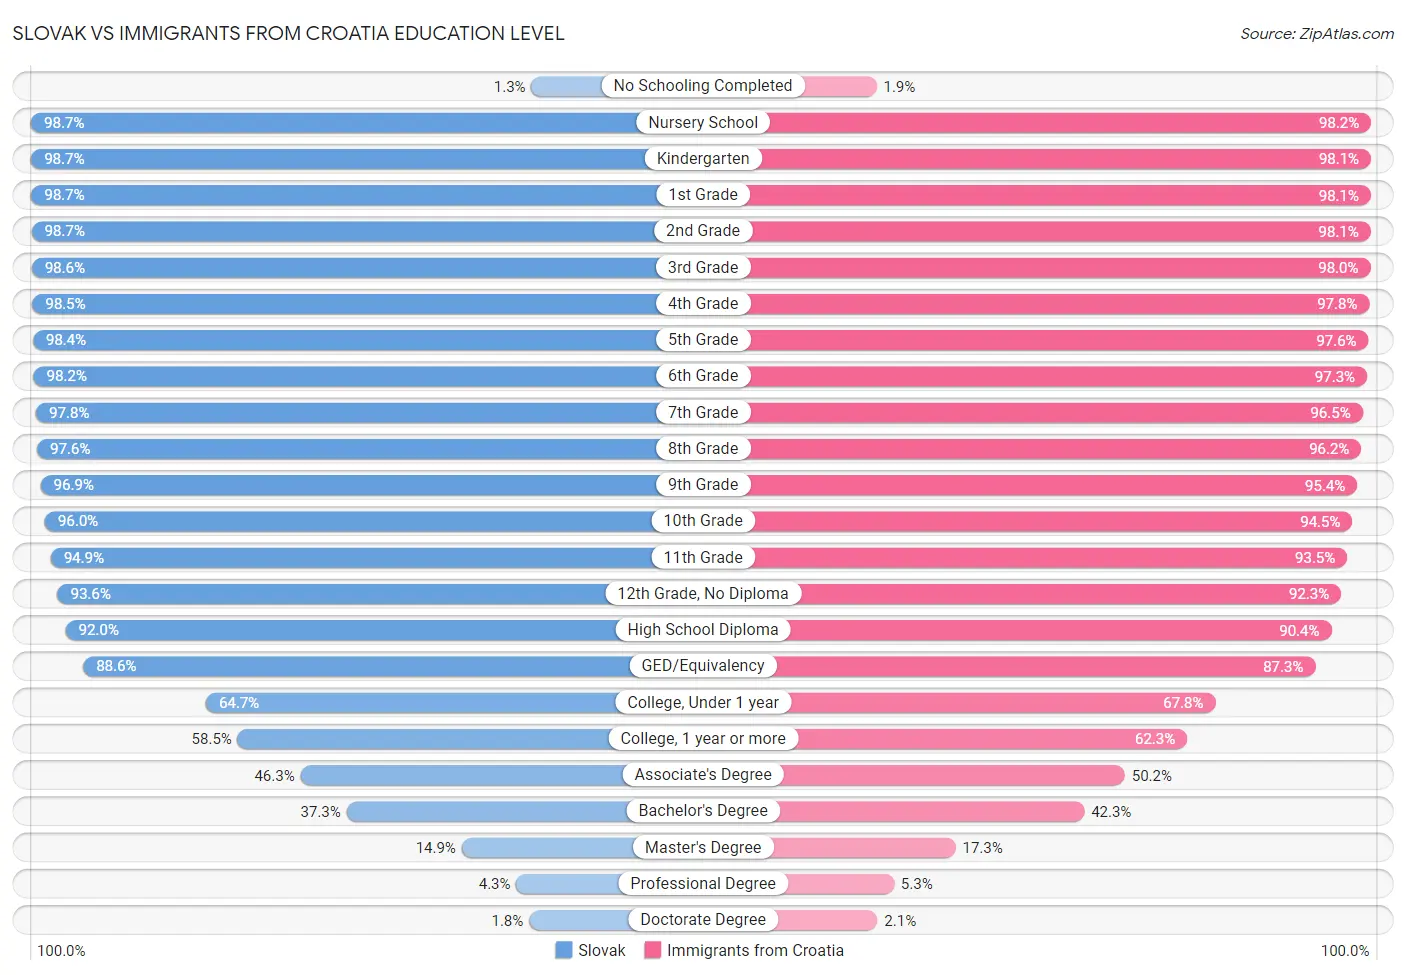 Slovak vs Immigrants from Croatia Education Level